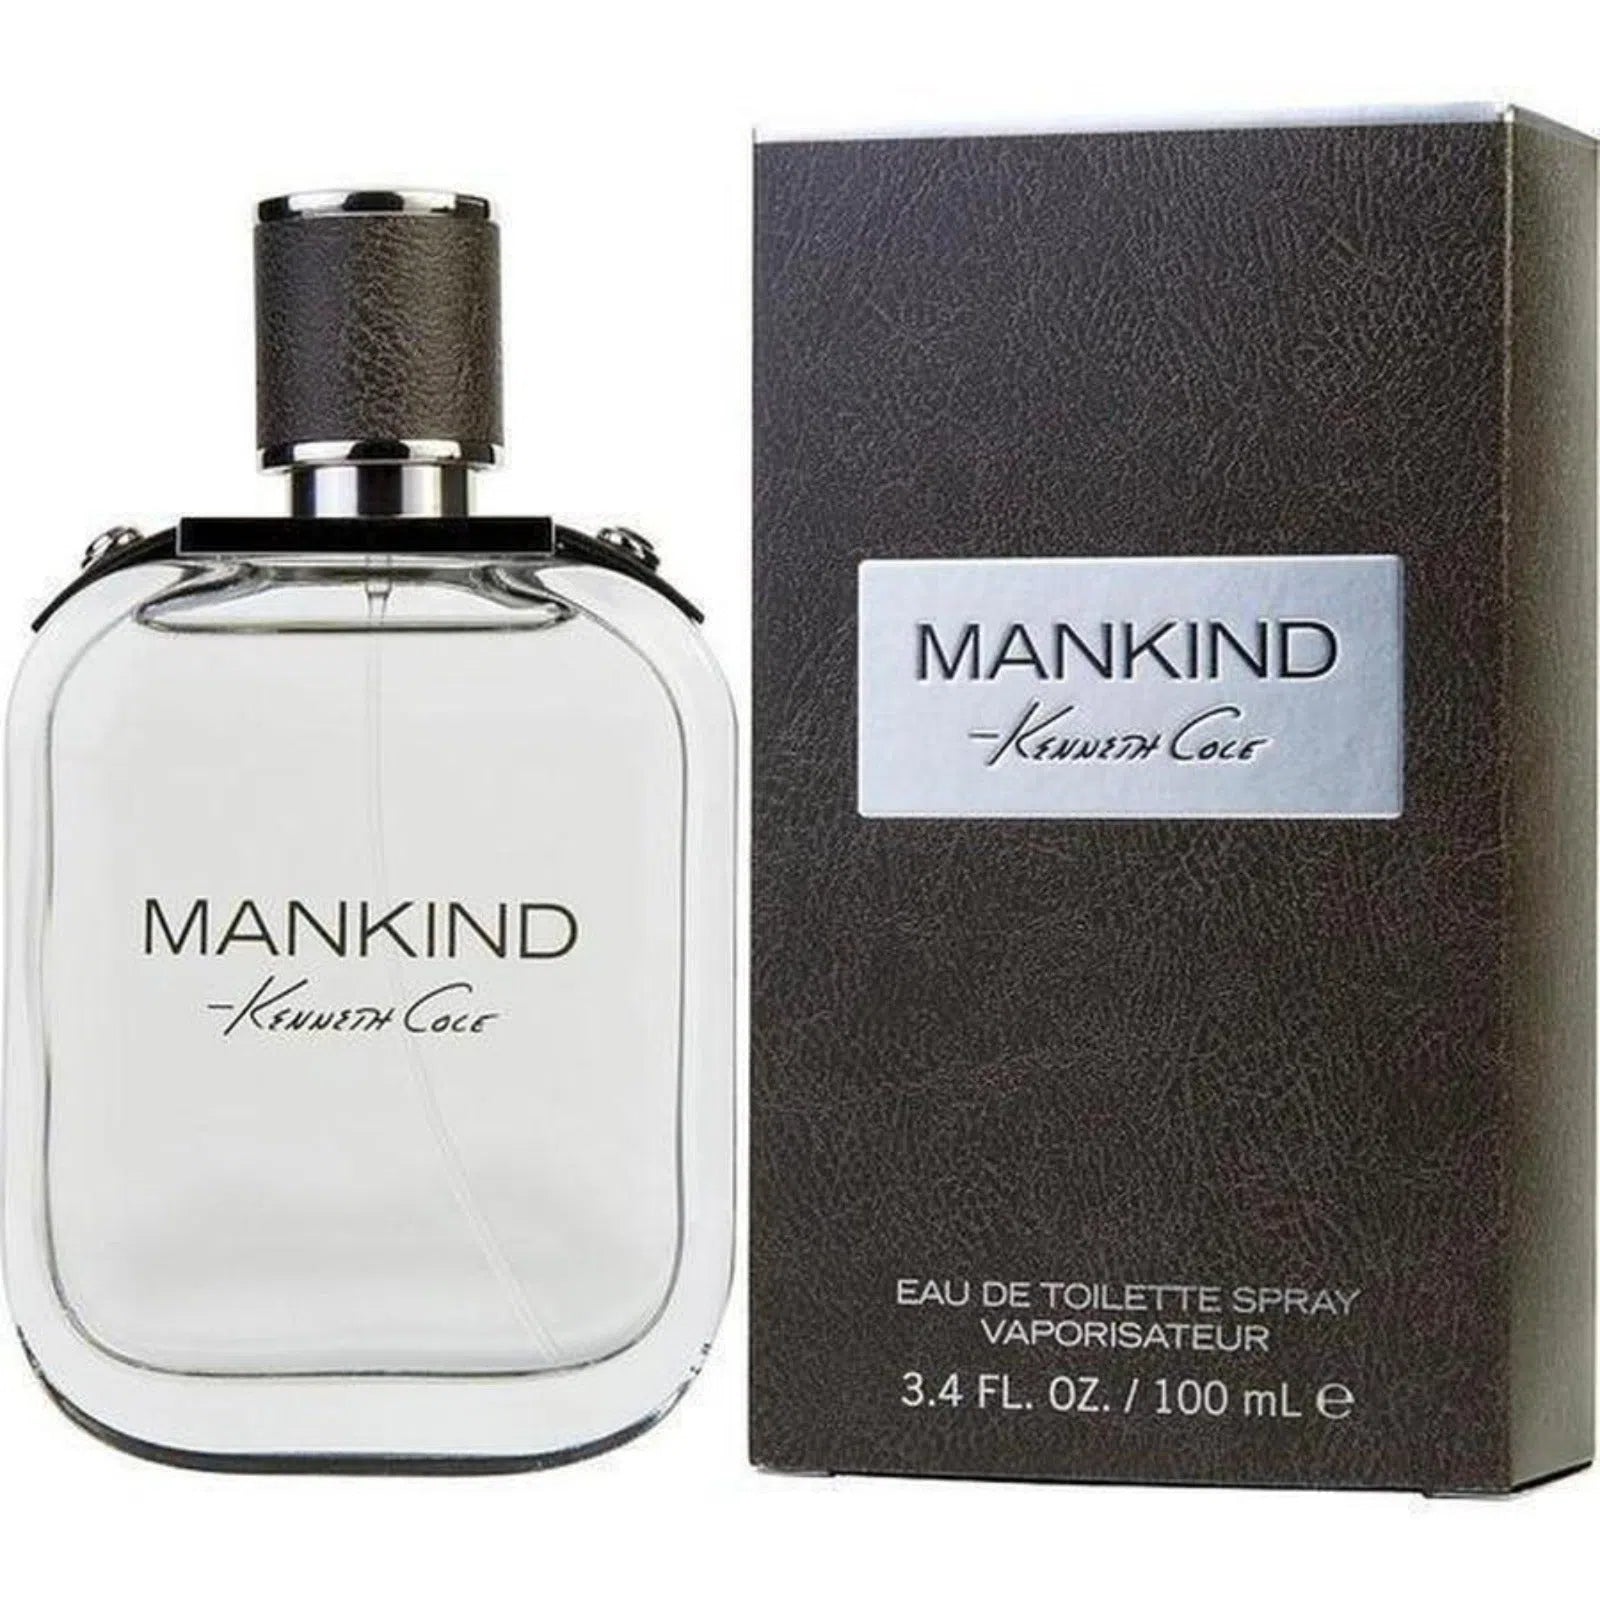 Perfume Kenneth Cole Mankind EDT (M) / 100 ml - 608940556009- Prive Perfumes Honduras